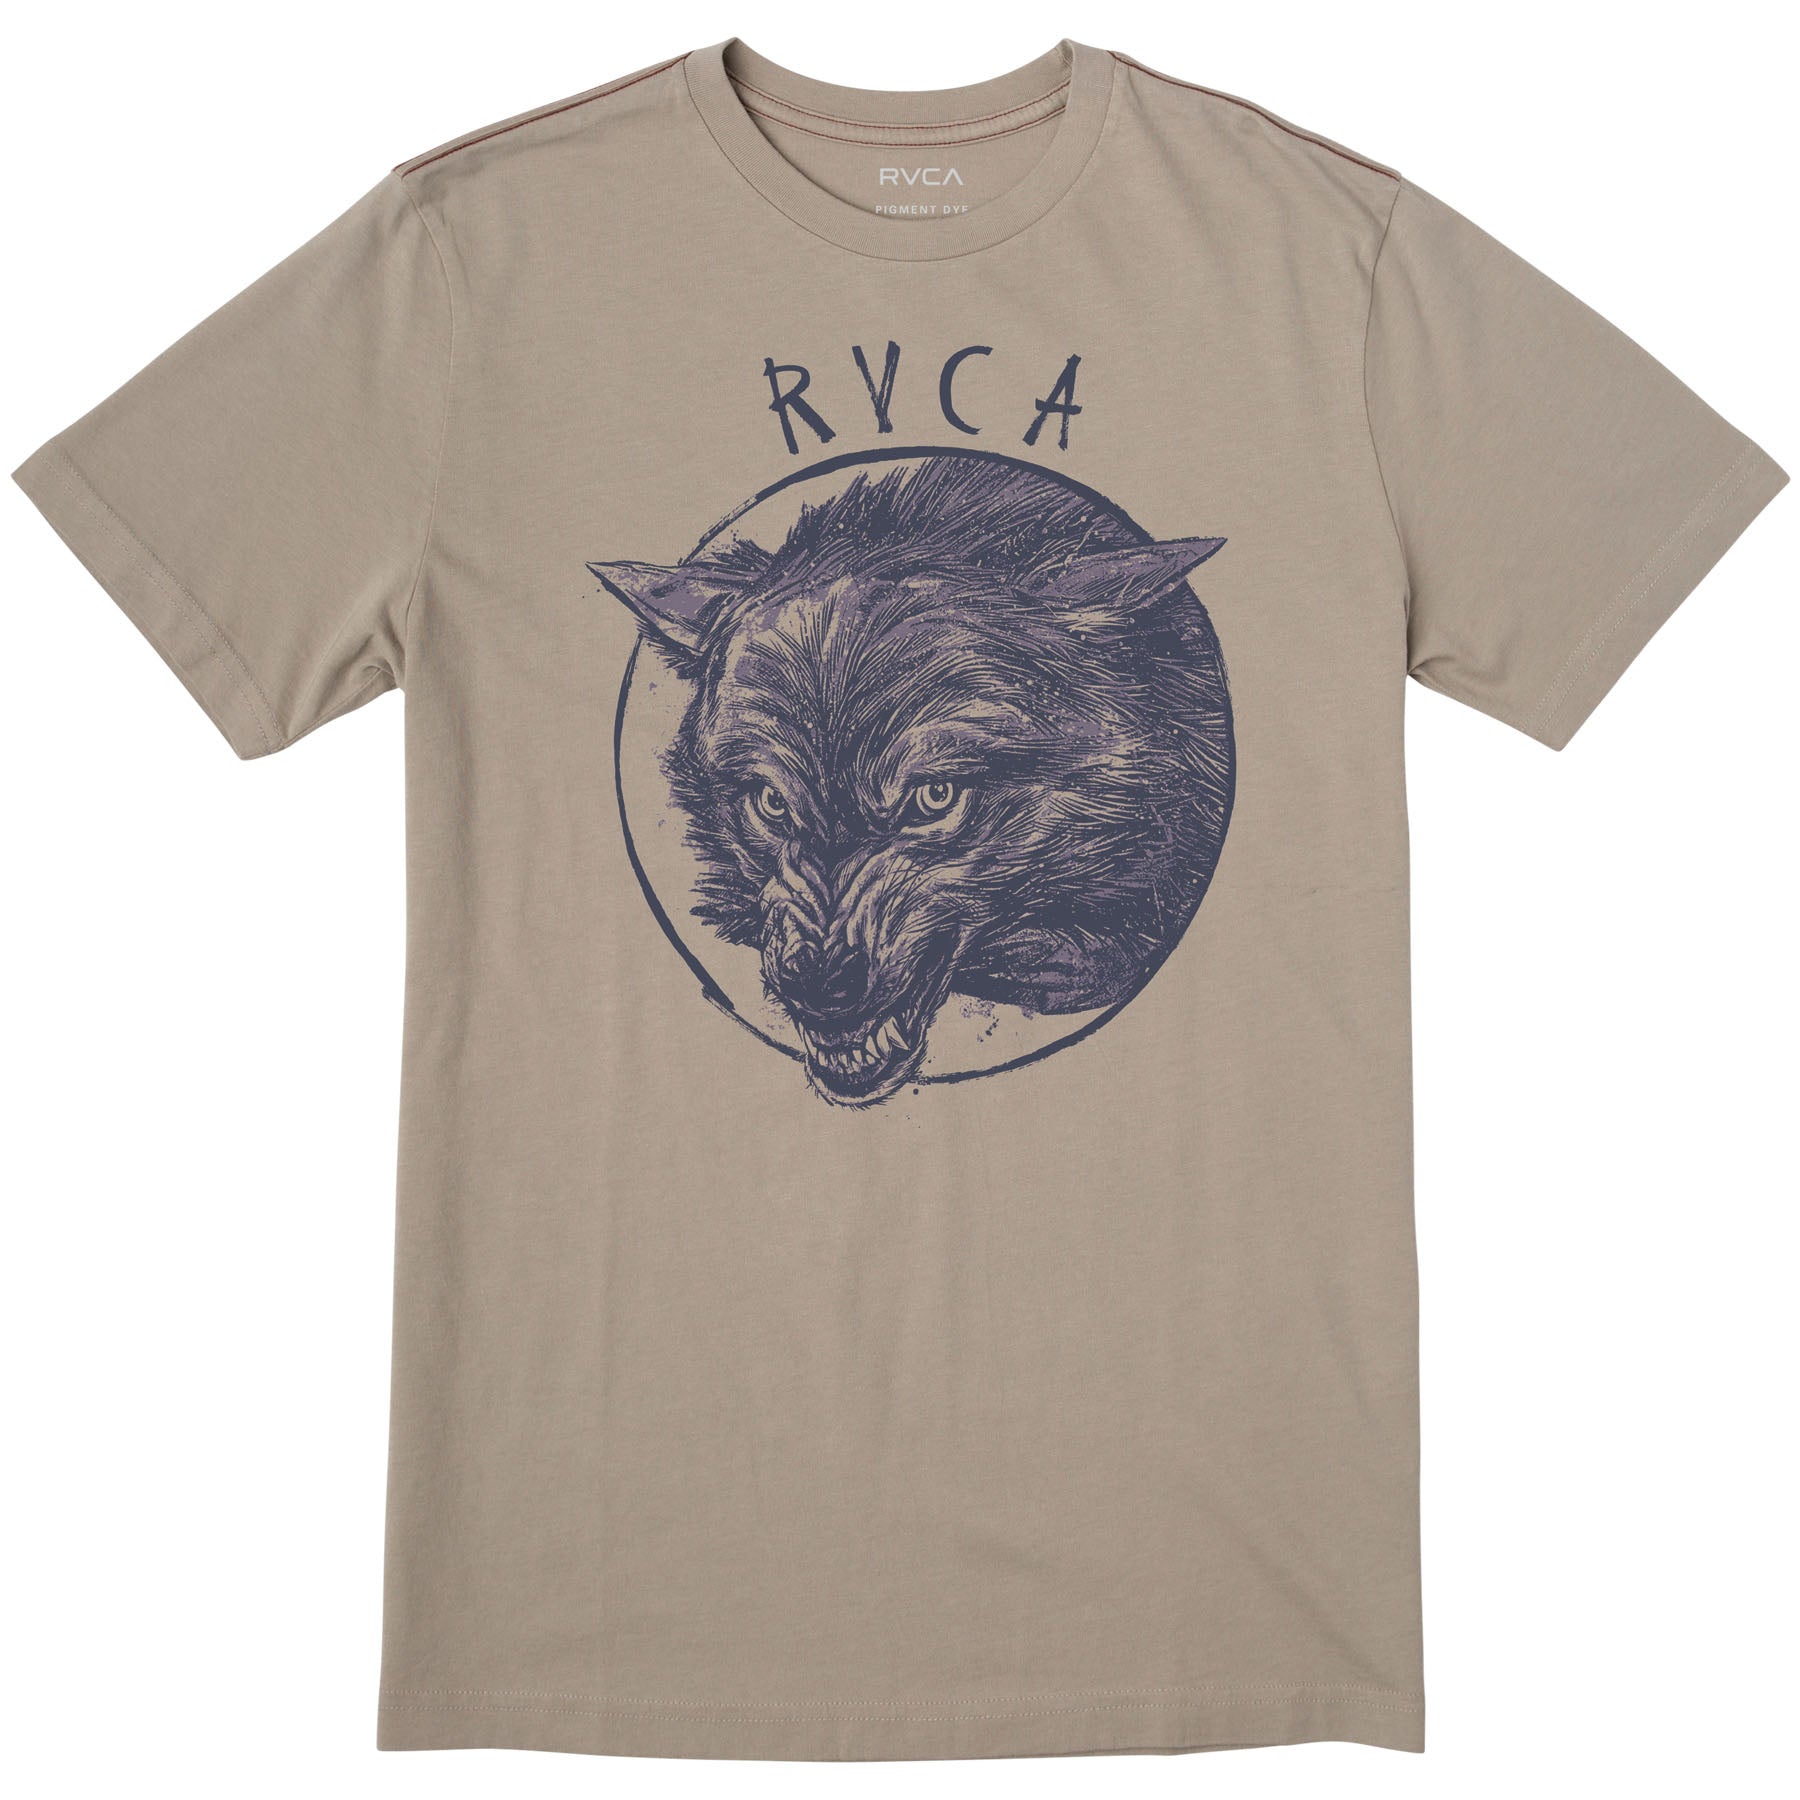 RVCA Snarl Tee Shirt - NO RETURNS Graphic Tee RVCA Over Cast Medium 